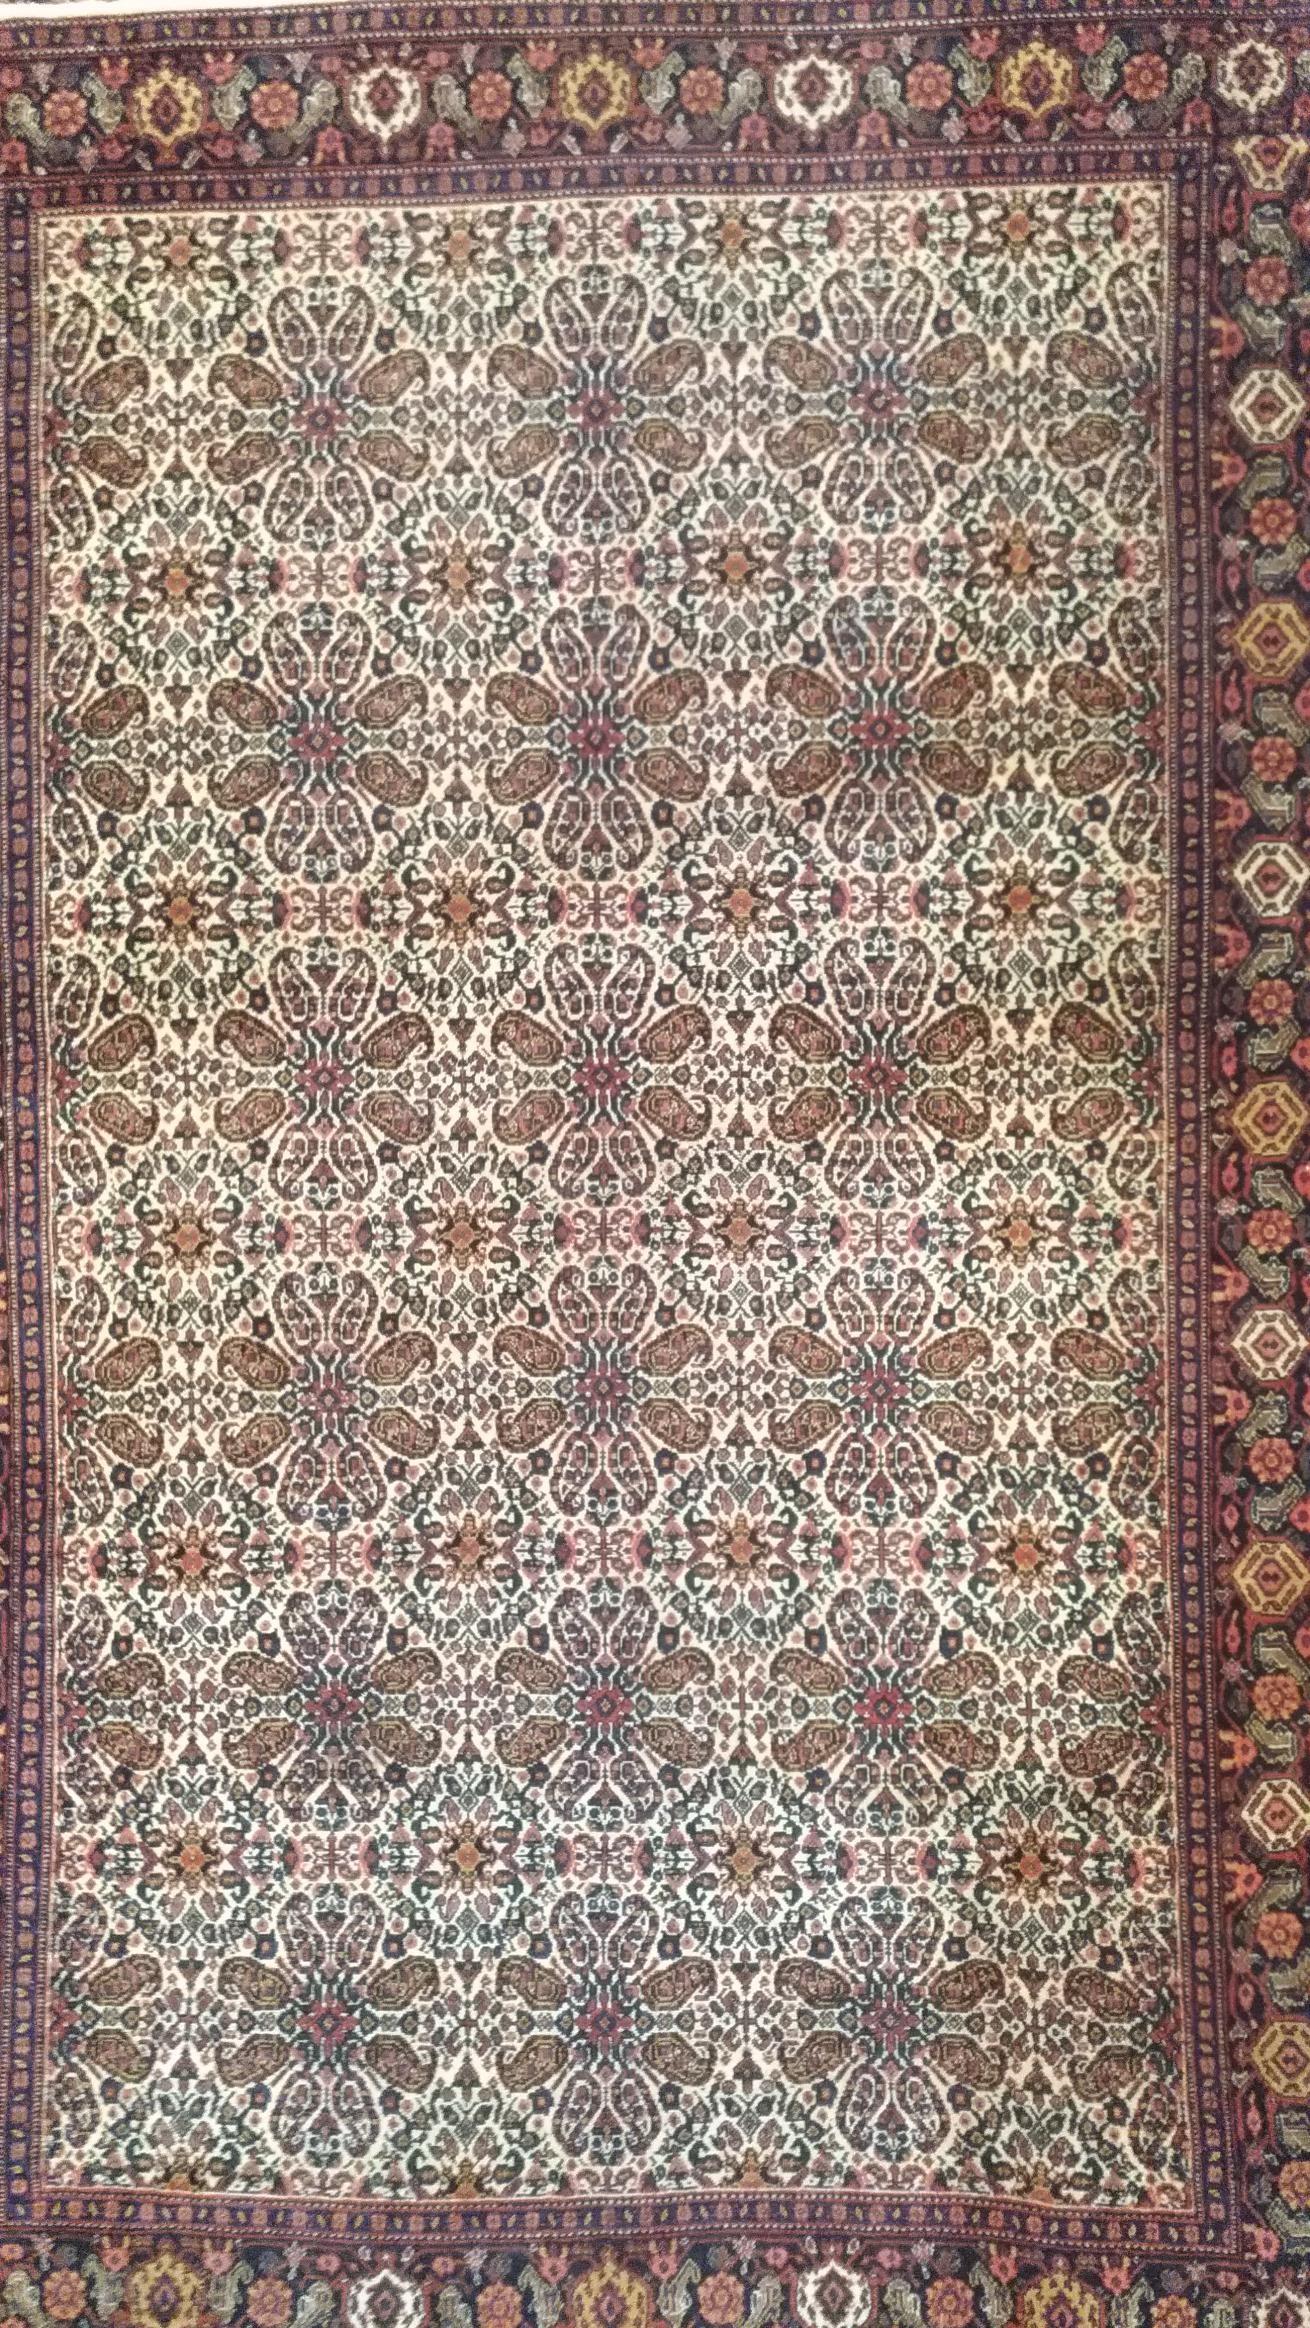 1023 - Magnificent 19th Century Kurdish Senneh Carpet In Excellent Condition For Sale In Paris, FR